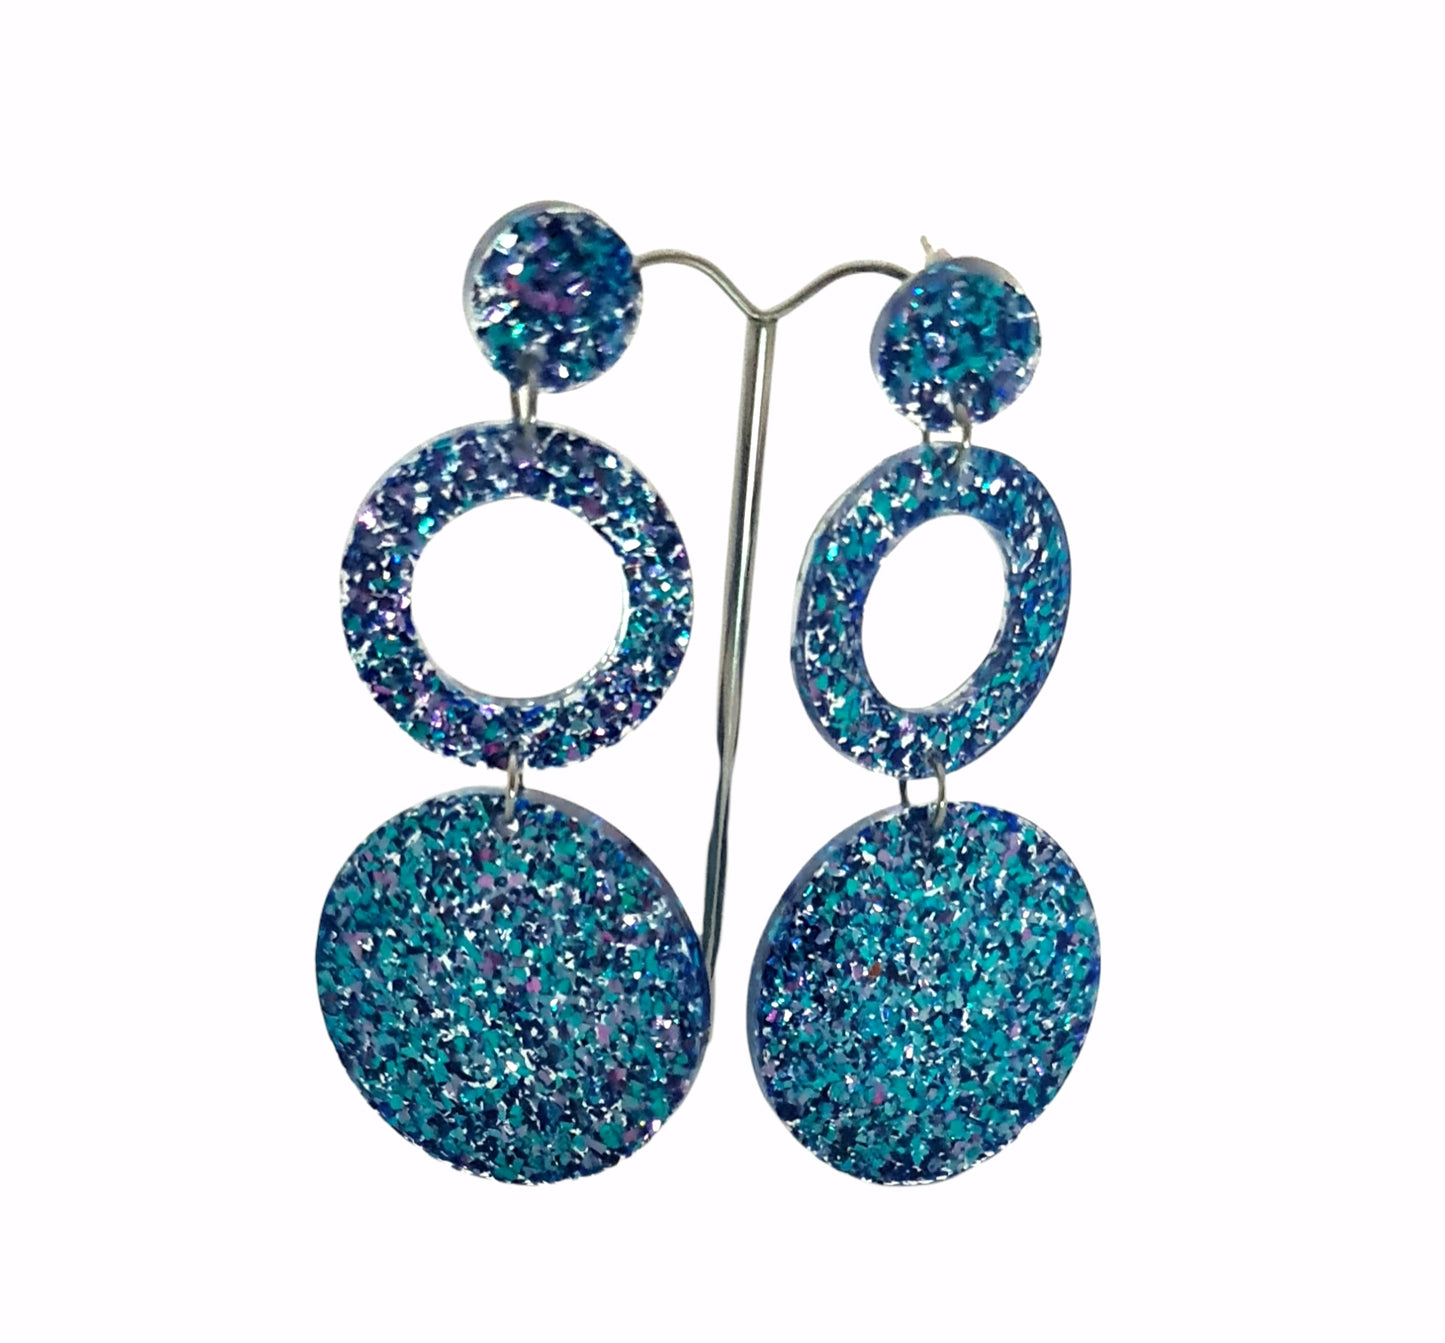 Chameleon Circle Hoop Earrings, Blue Pink Holographic Shards Glitter Dangle Statement Earrings